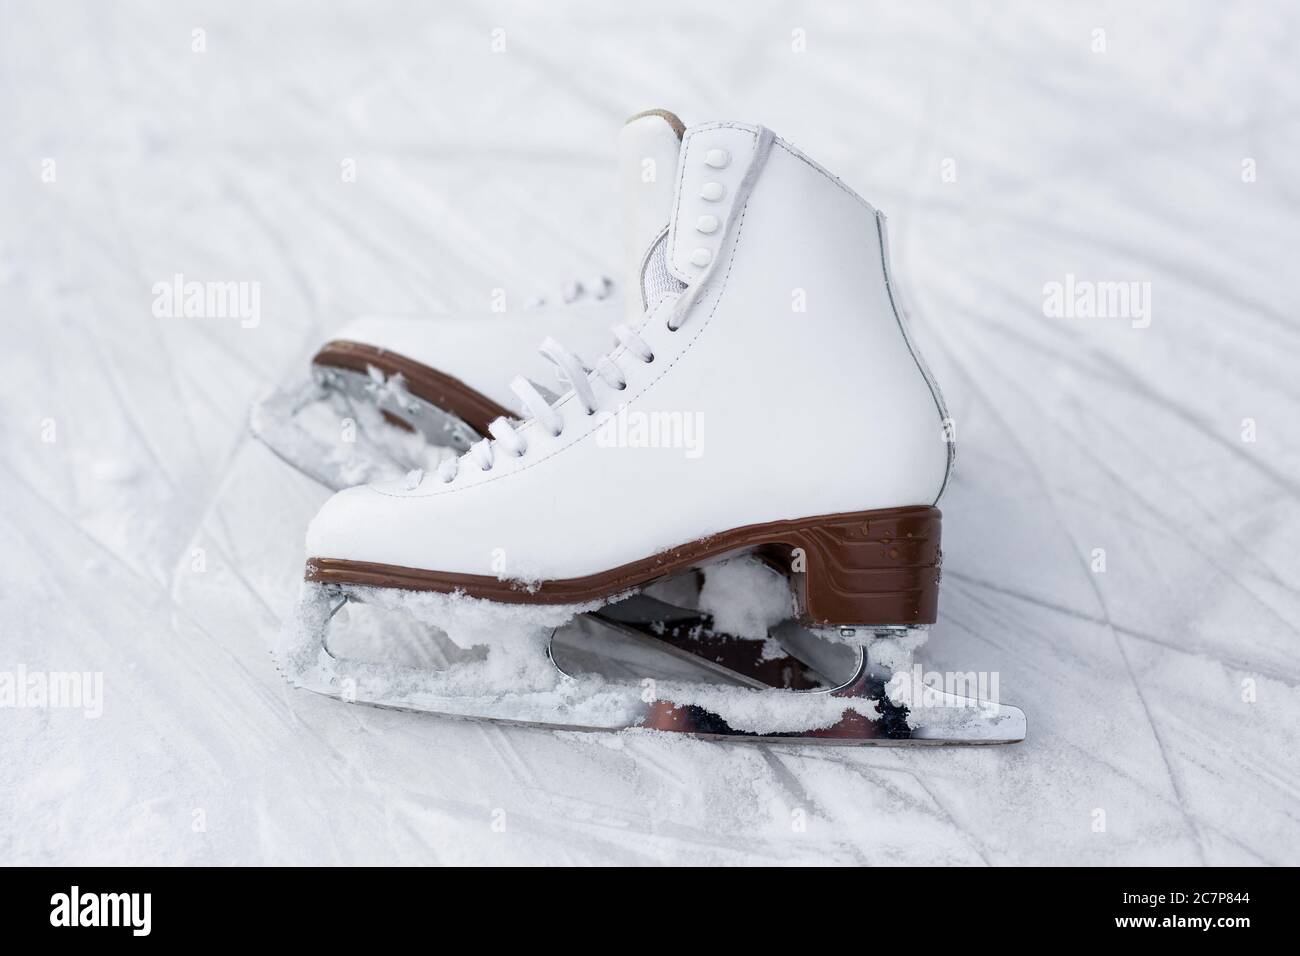 5700 Ice Skate Illustrations RoyaltyFree Vector Graphics  Clip Art   iStock  Ice skating Ice rink Hockey